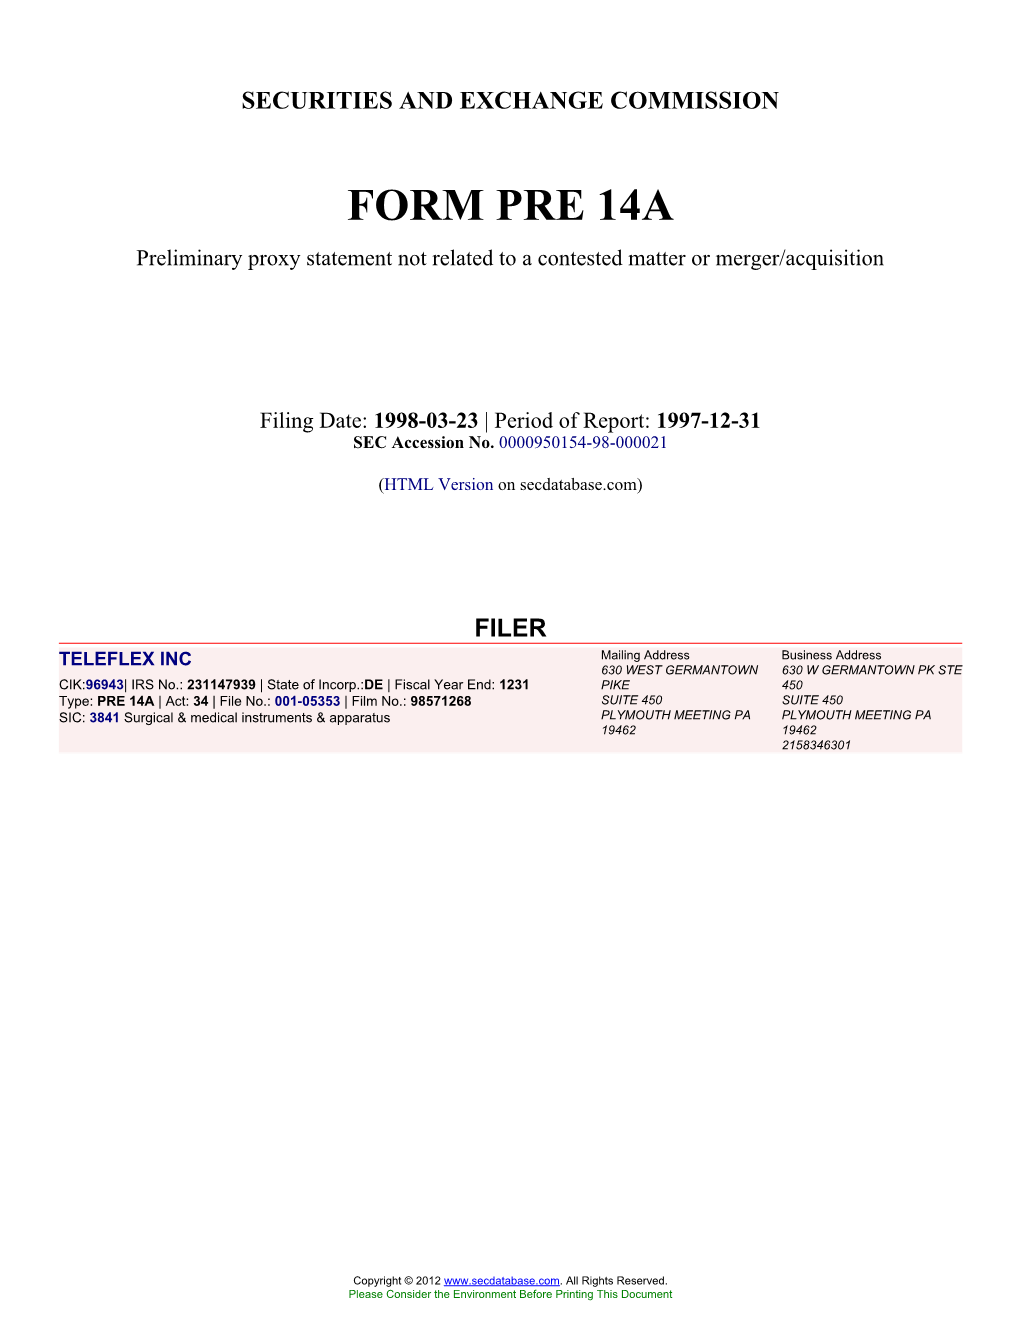 TELEFLEX INC (Form: PRE 14A, Filing Date: 03/23/1998)